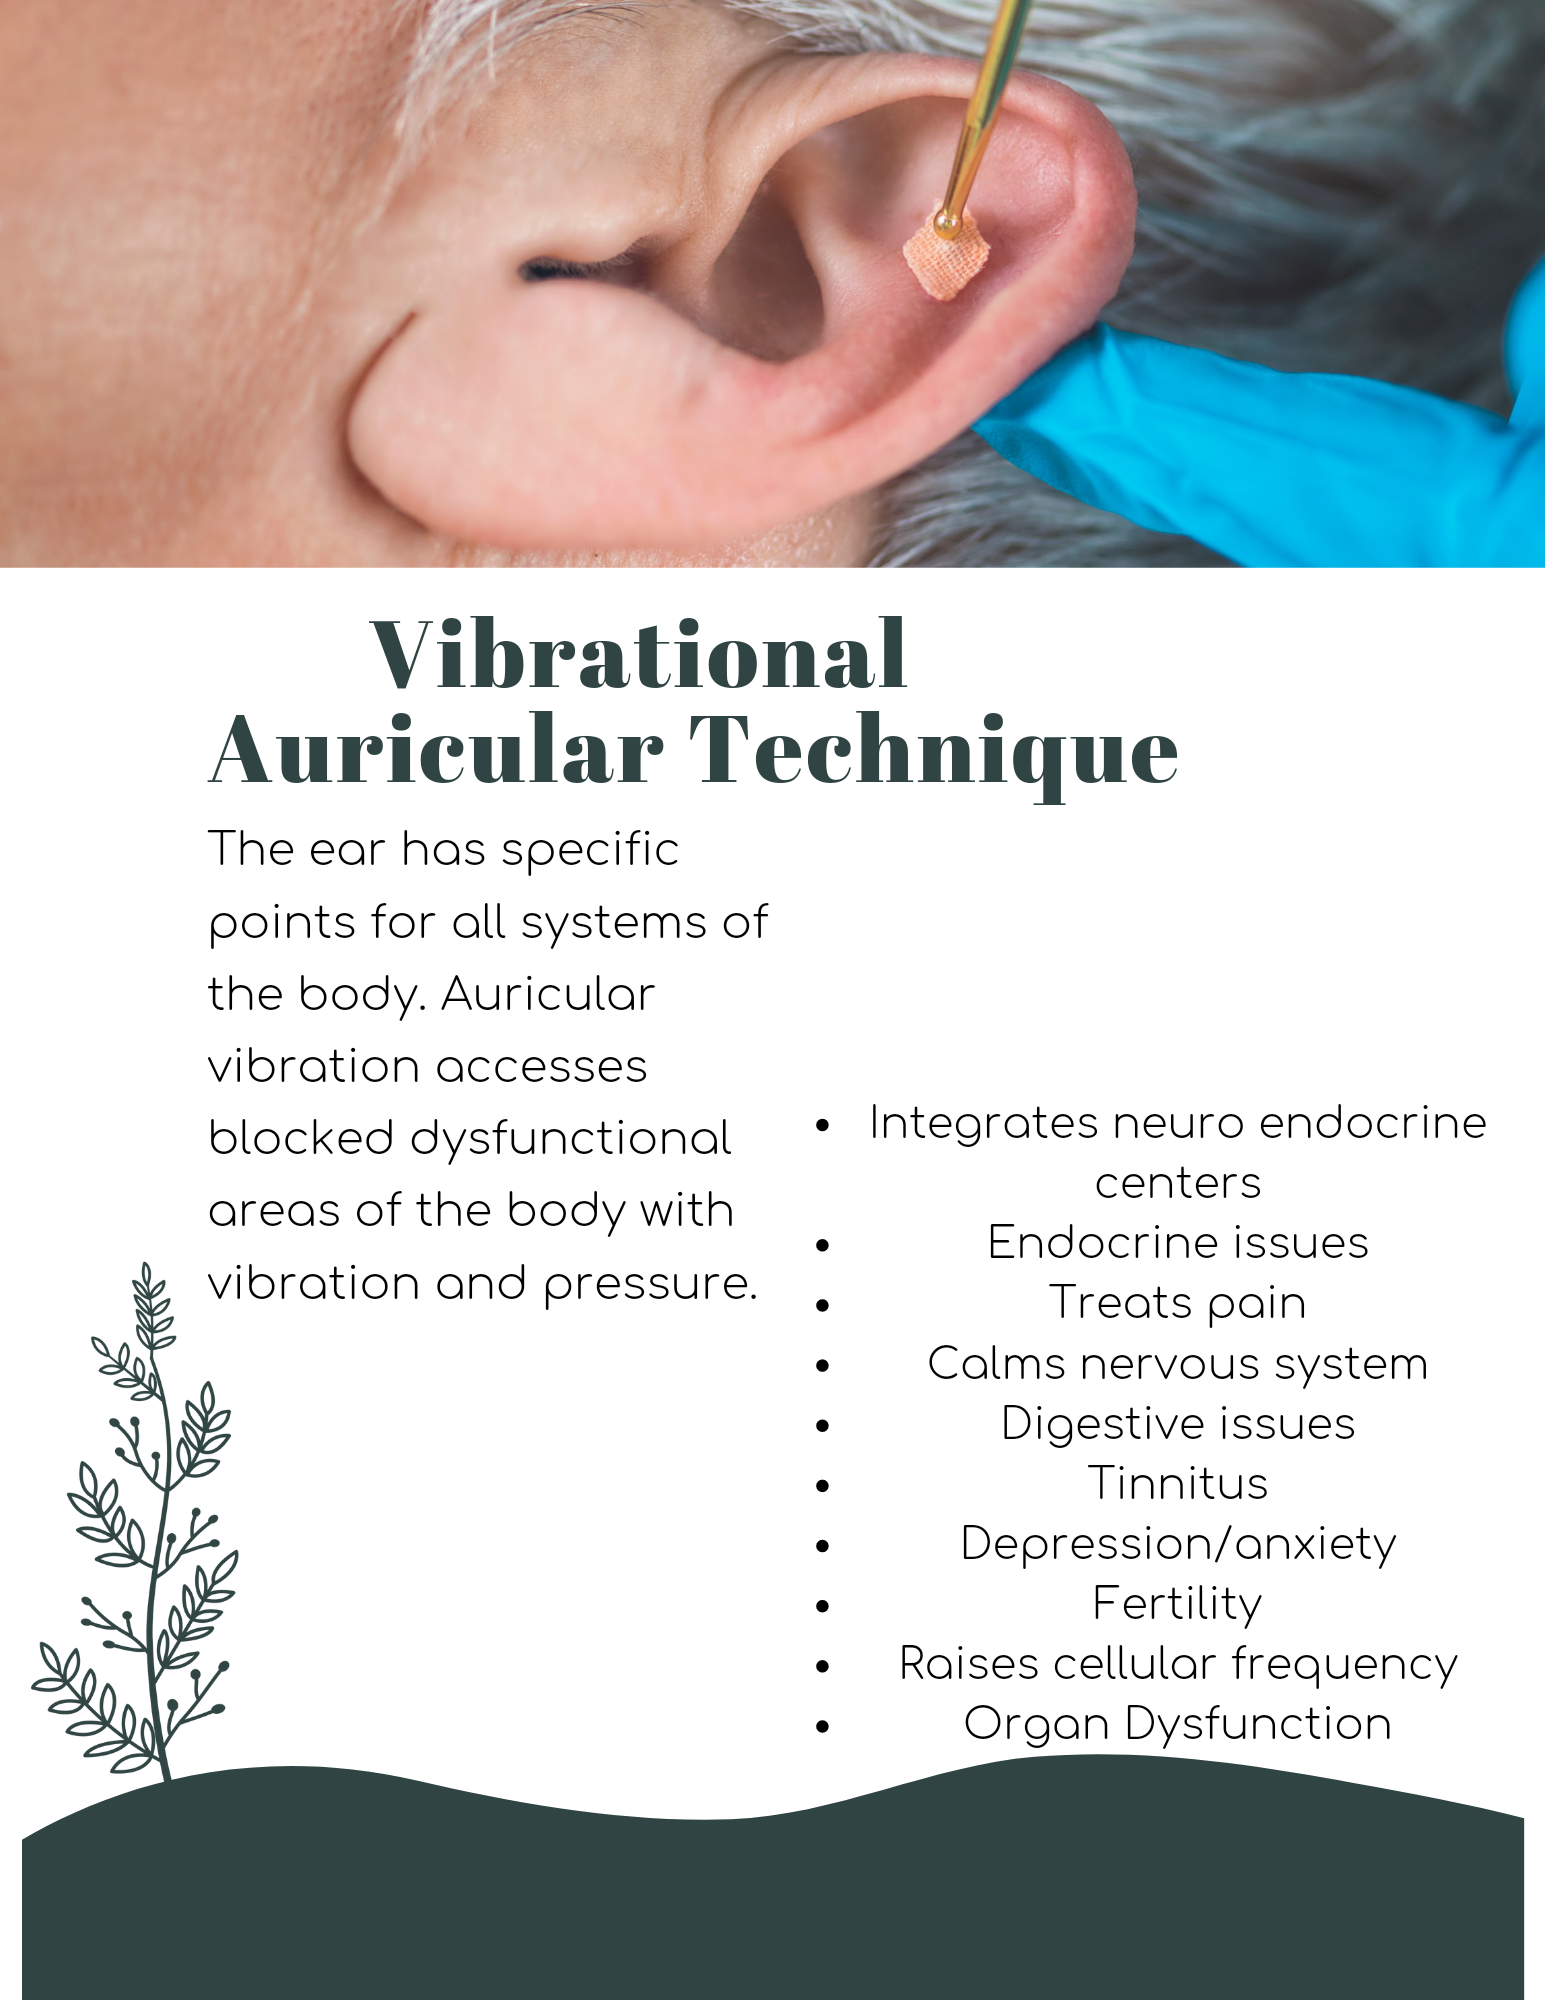 Vibrational Auricular Technique informational poster